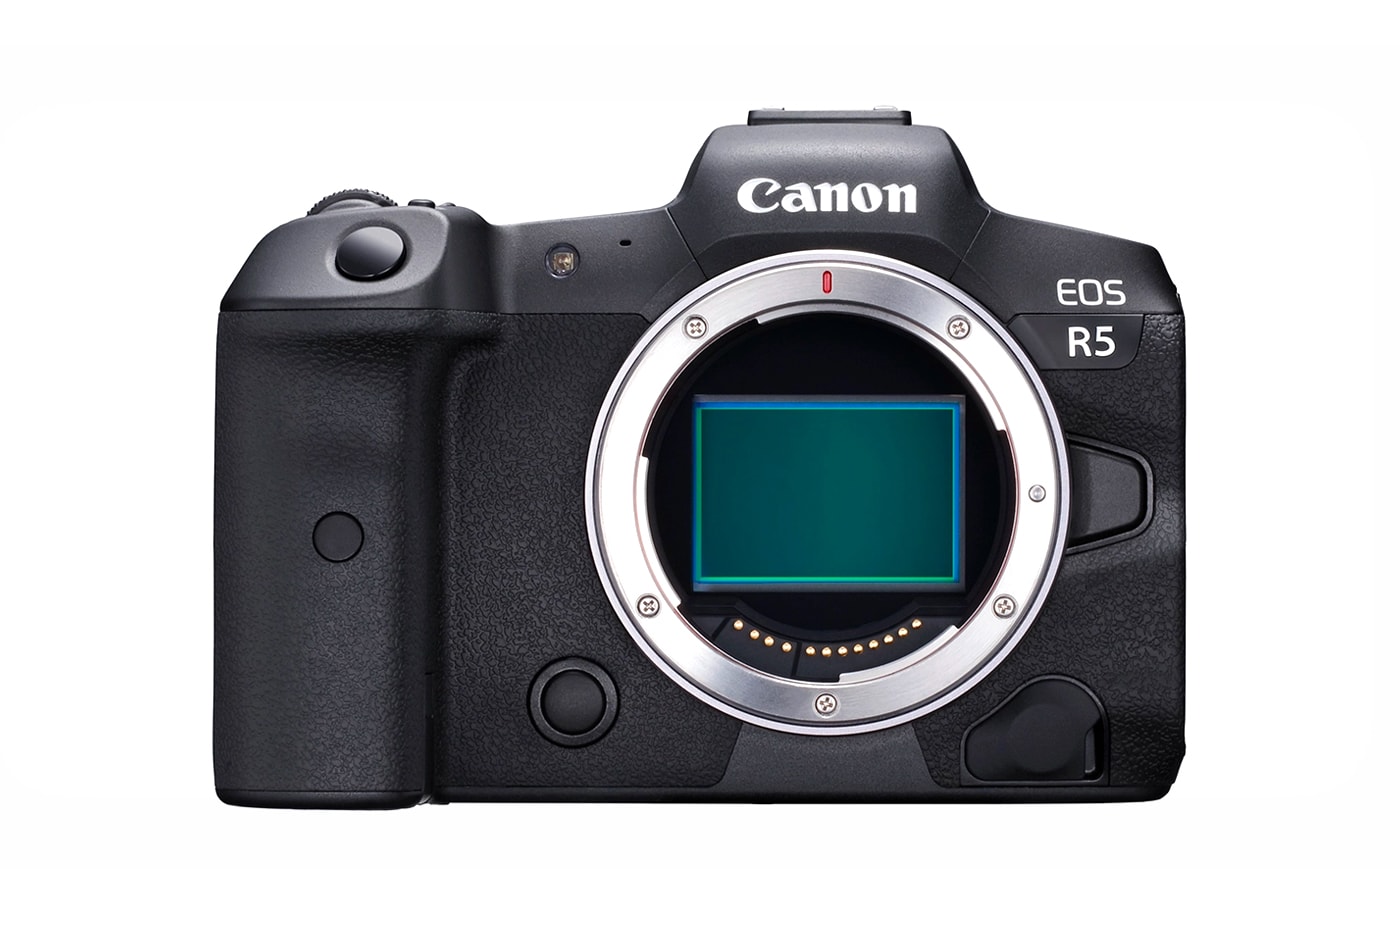 Canon EOS R5 4,000 Price Report News cameras full frame mirrorless Japanese Digital Cameras Canon Mark V 5D MKIV